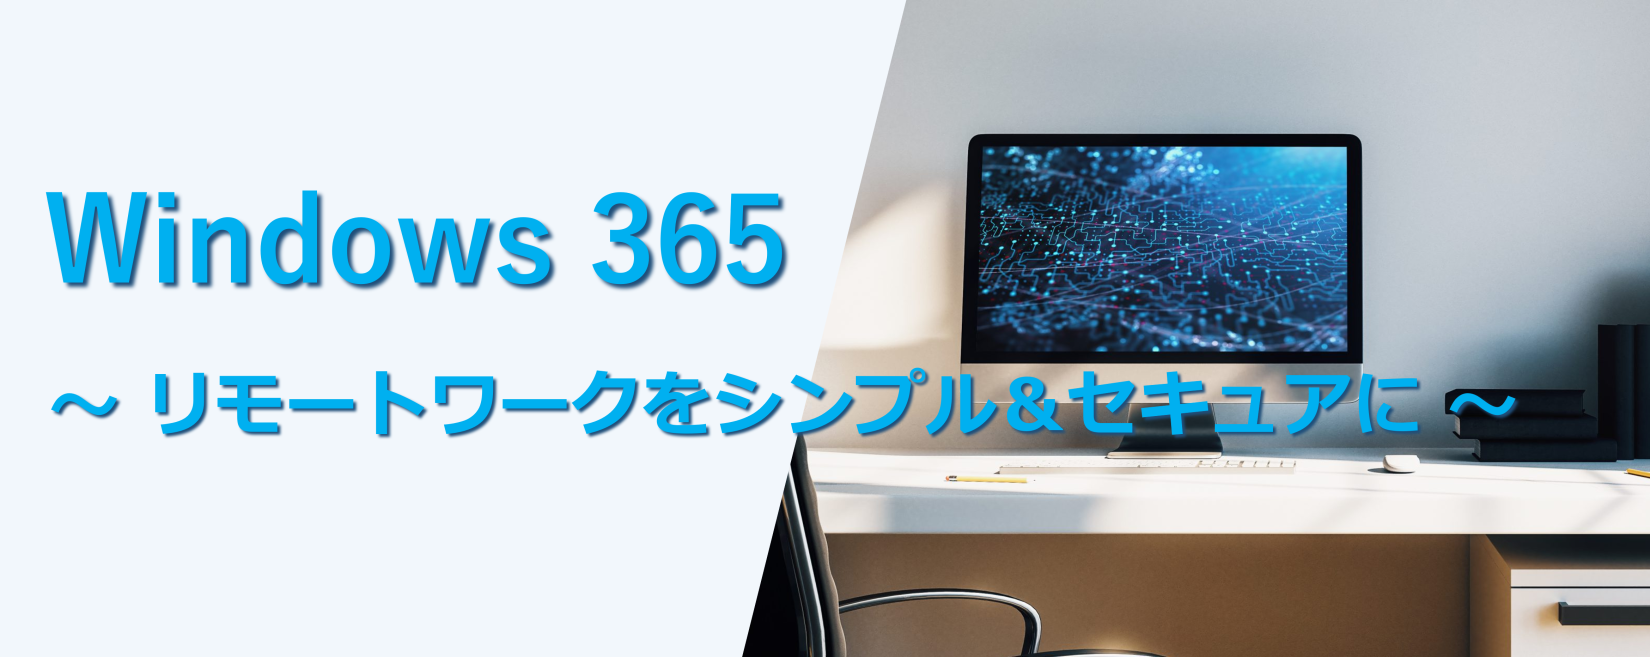 Windows 365 バナー